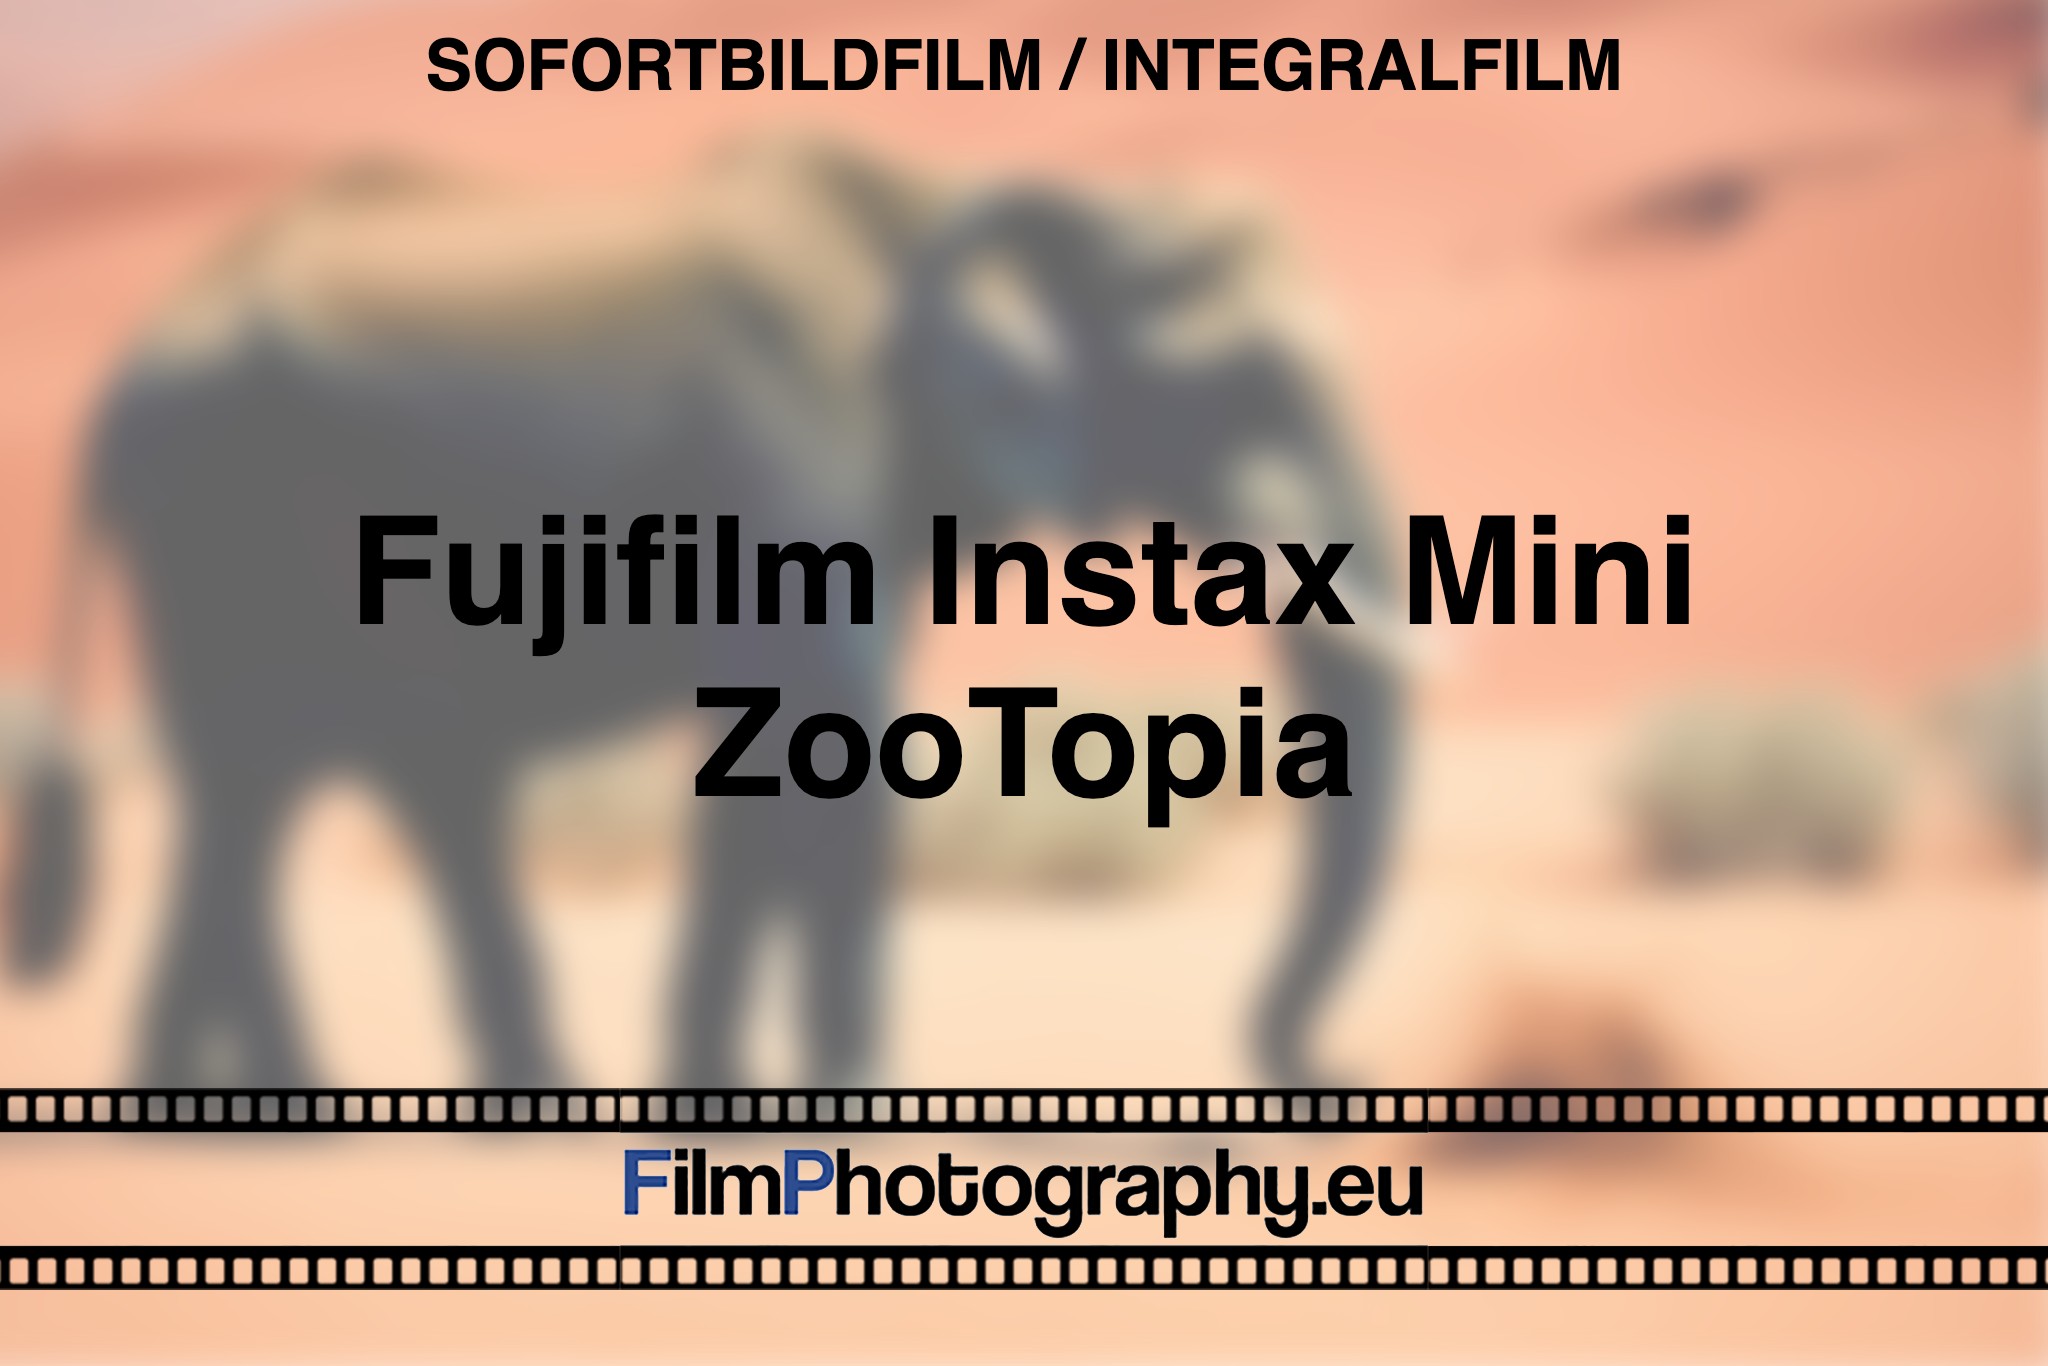 fujifilm-instax-mini-zootopia-sofortbildfilm-integralfilm-fp-bnv